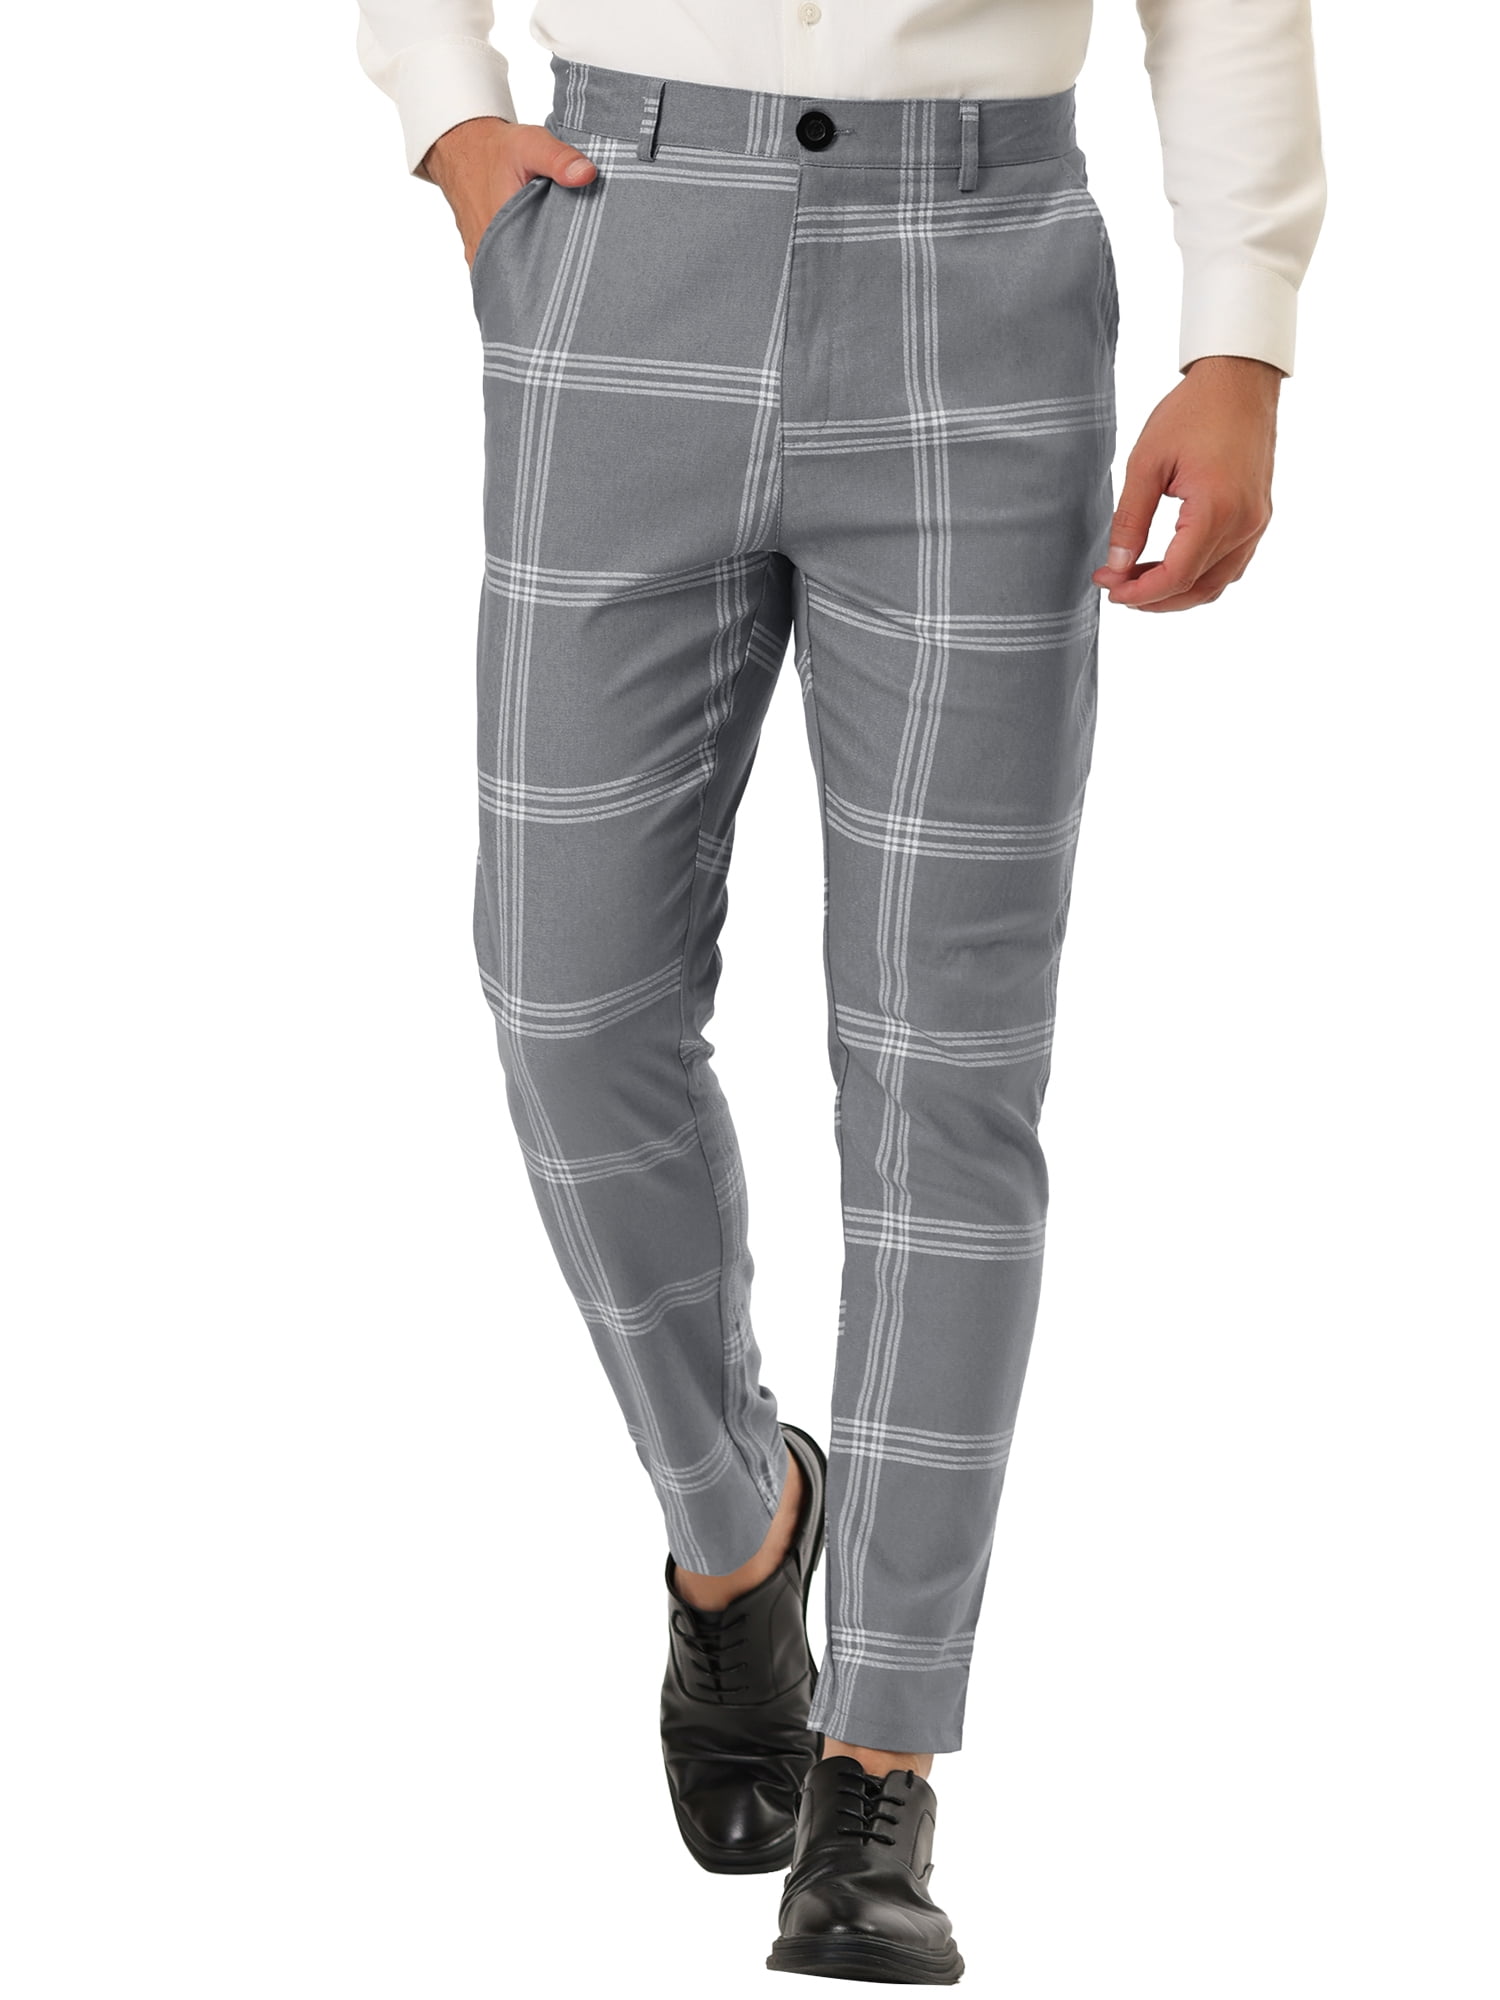 Slim Fit Grey Navy Plaid Pants - Benjamin's Menswear